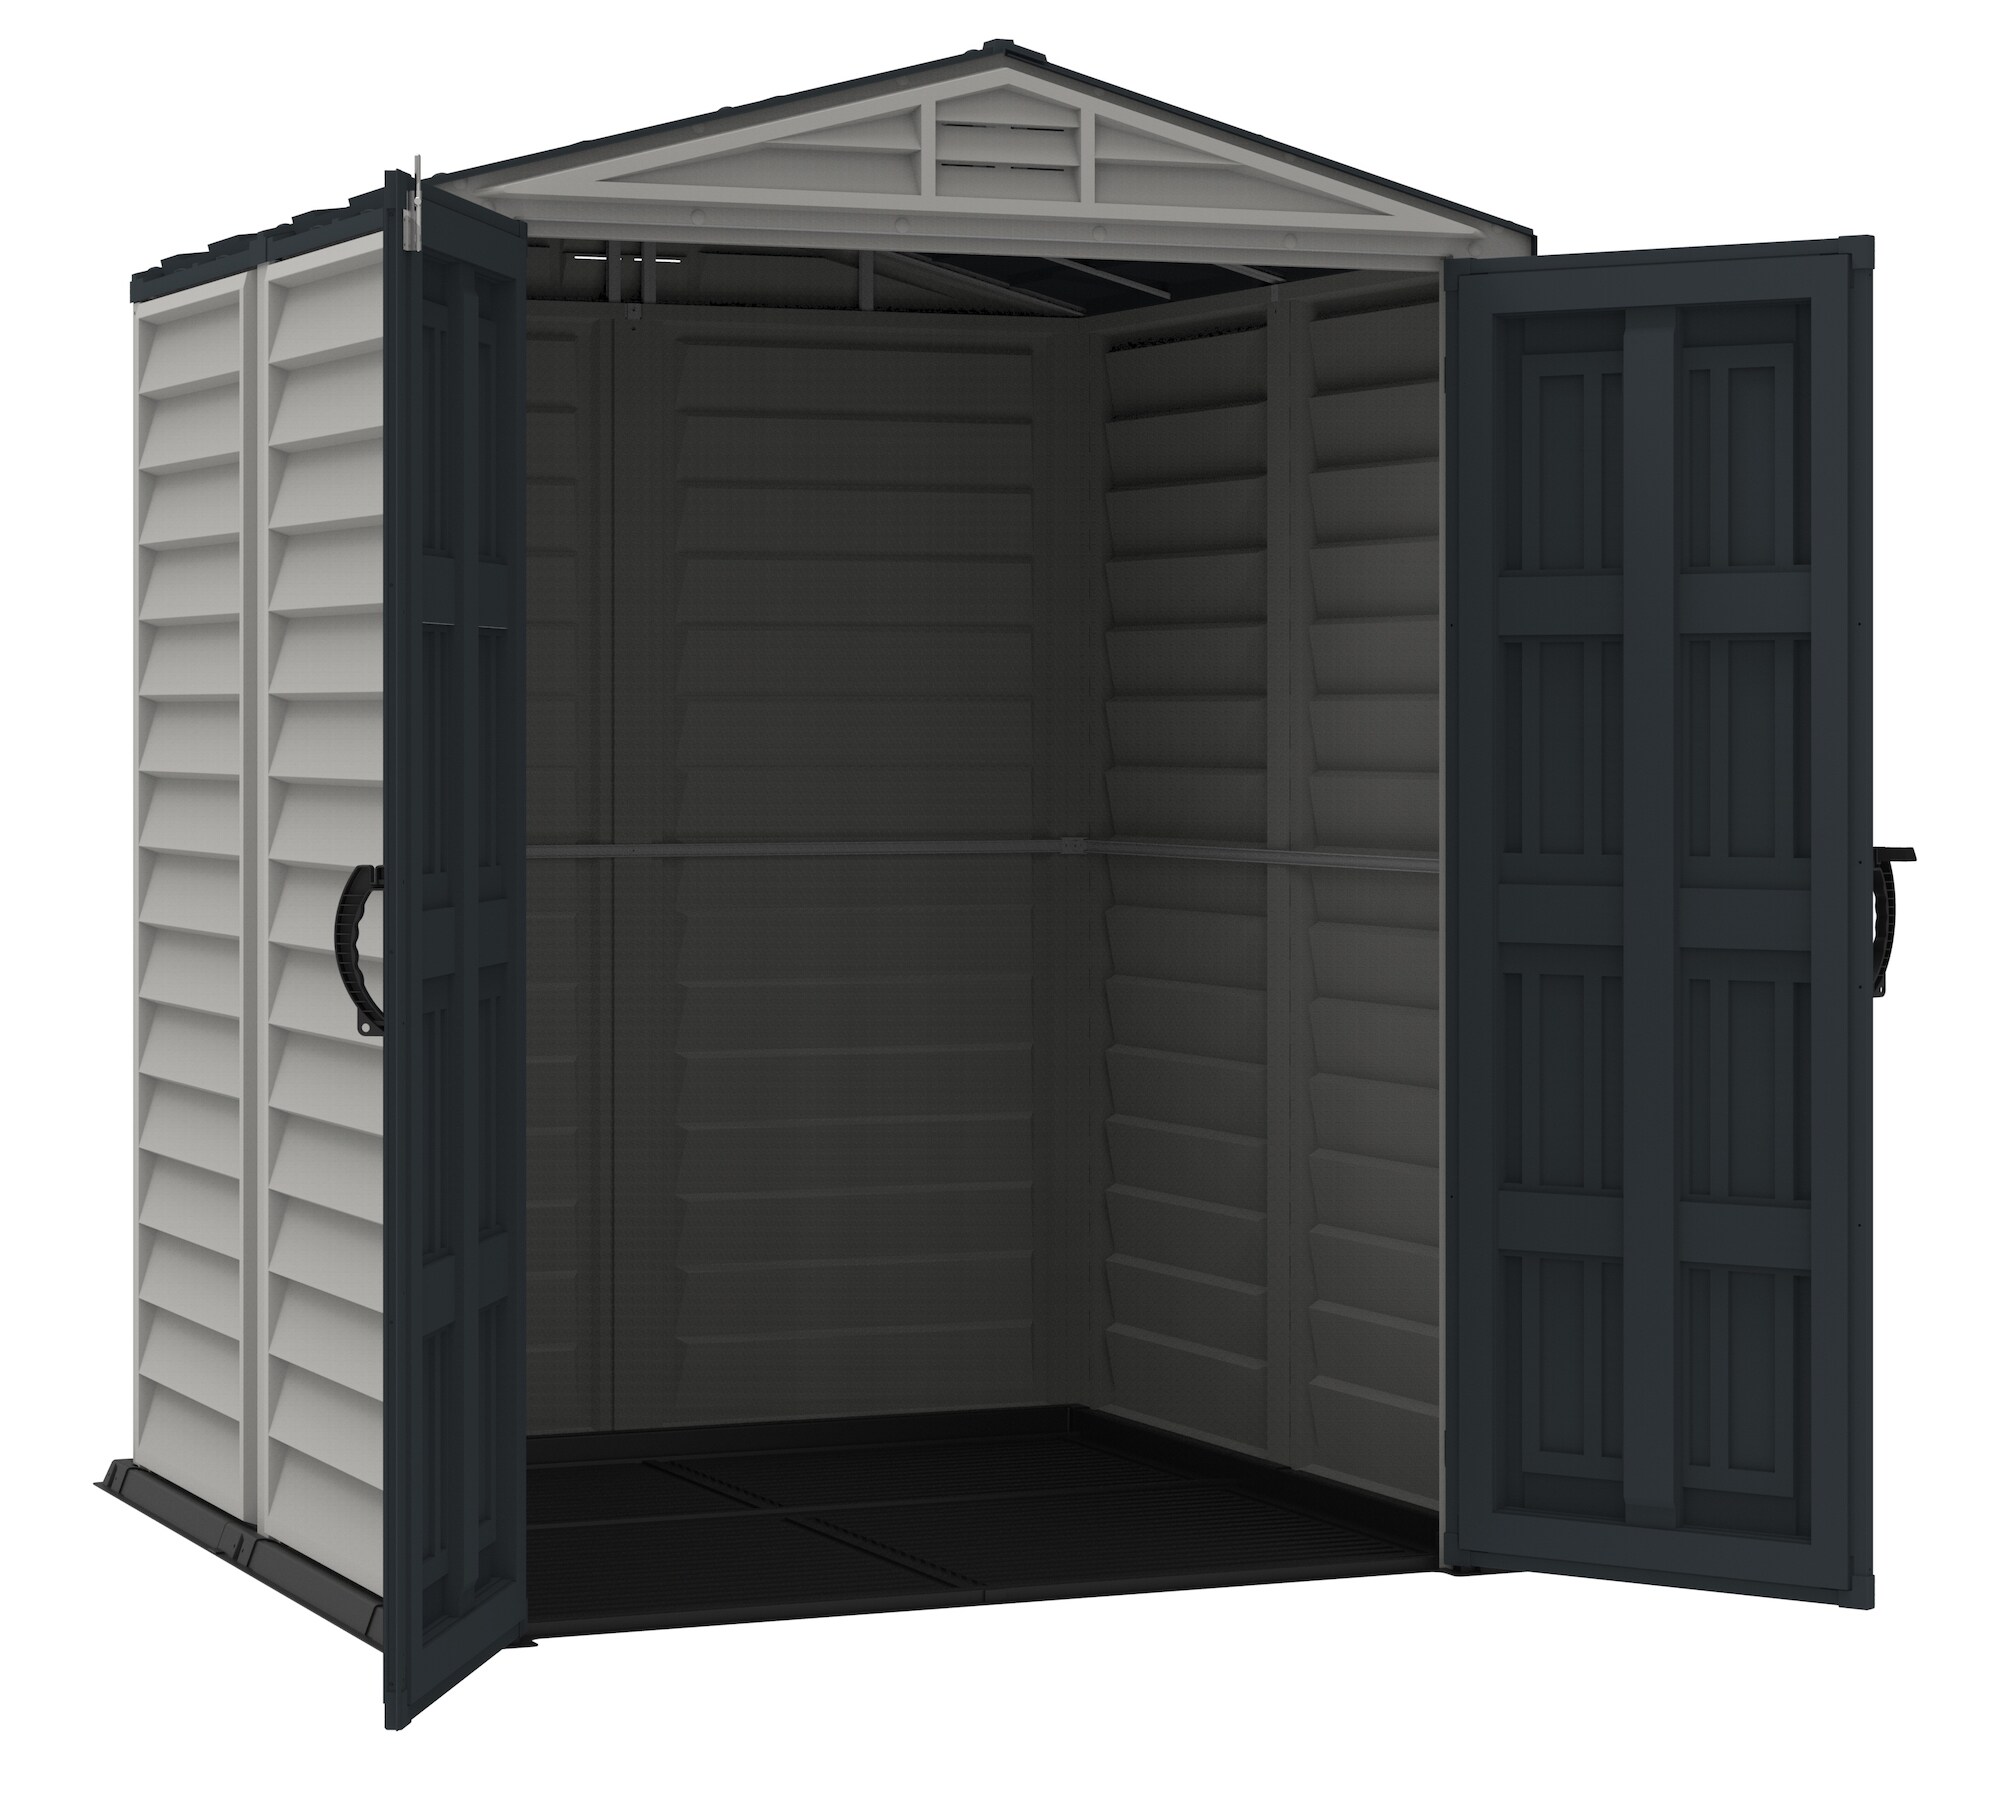 5 Large Sheds for Maximum Storage & Extra Space